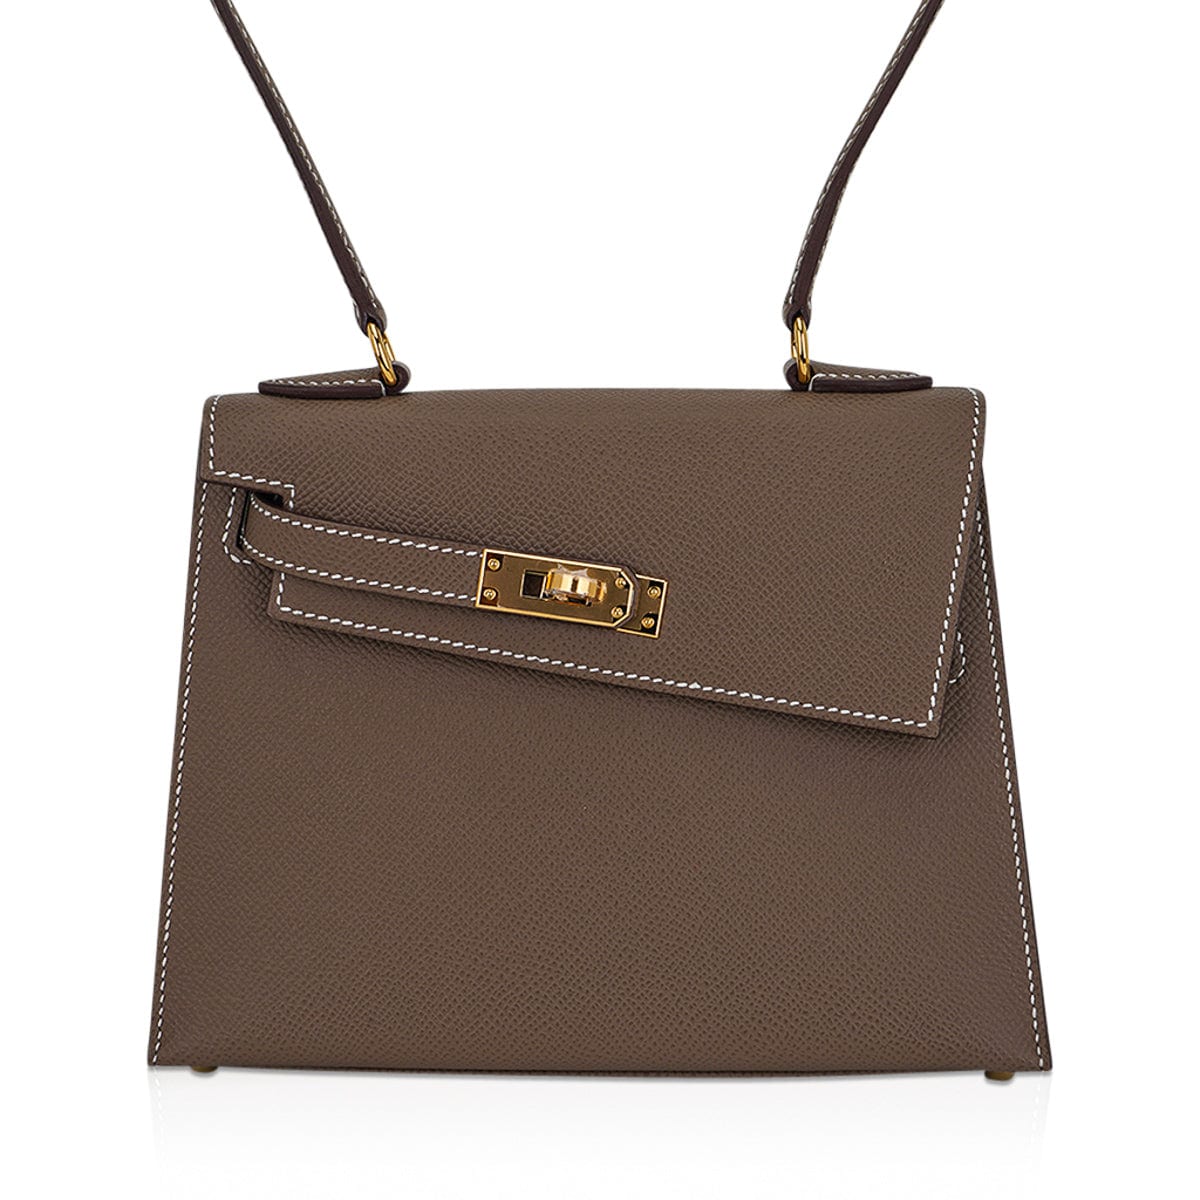 Hermes Mini Kelly Bag in Original Epsom Leather Brown